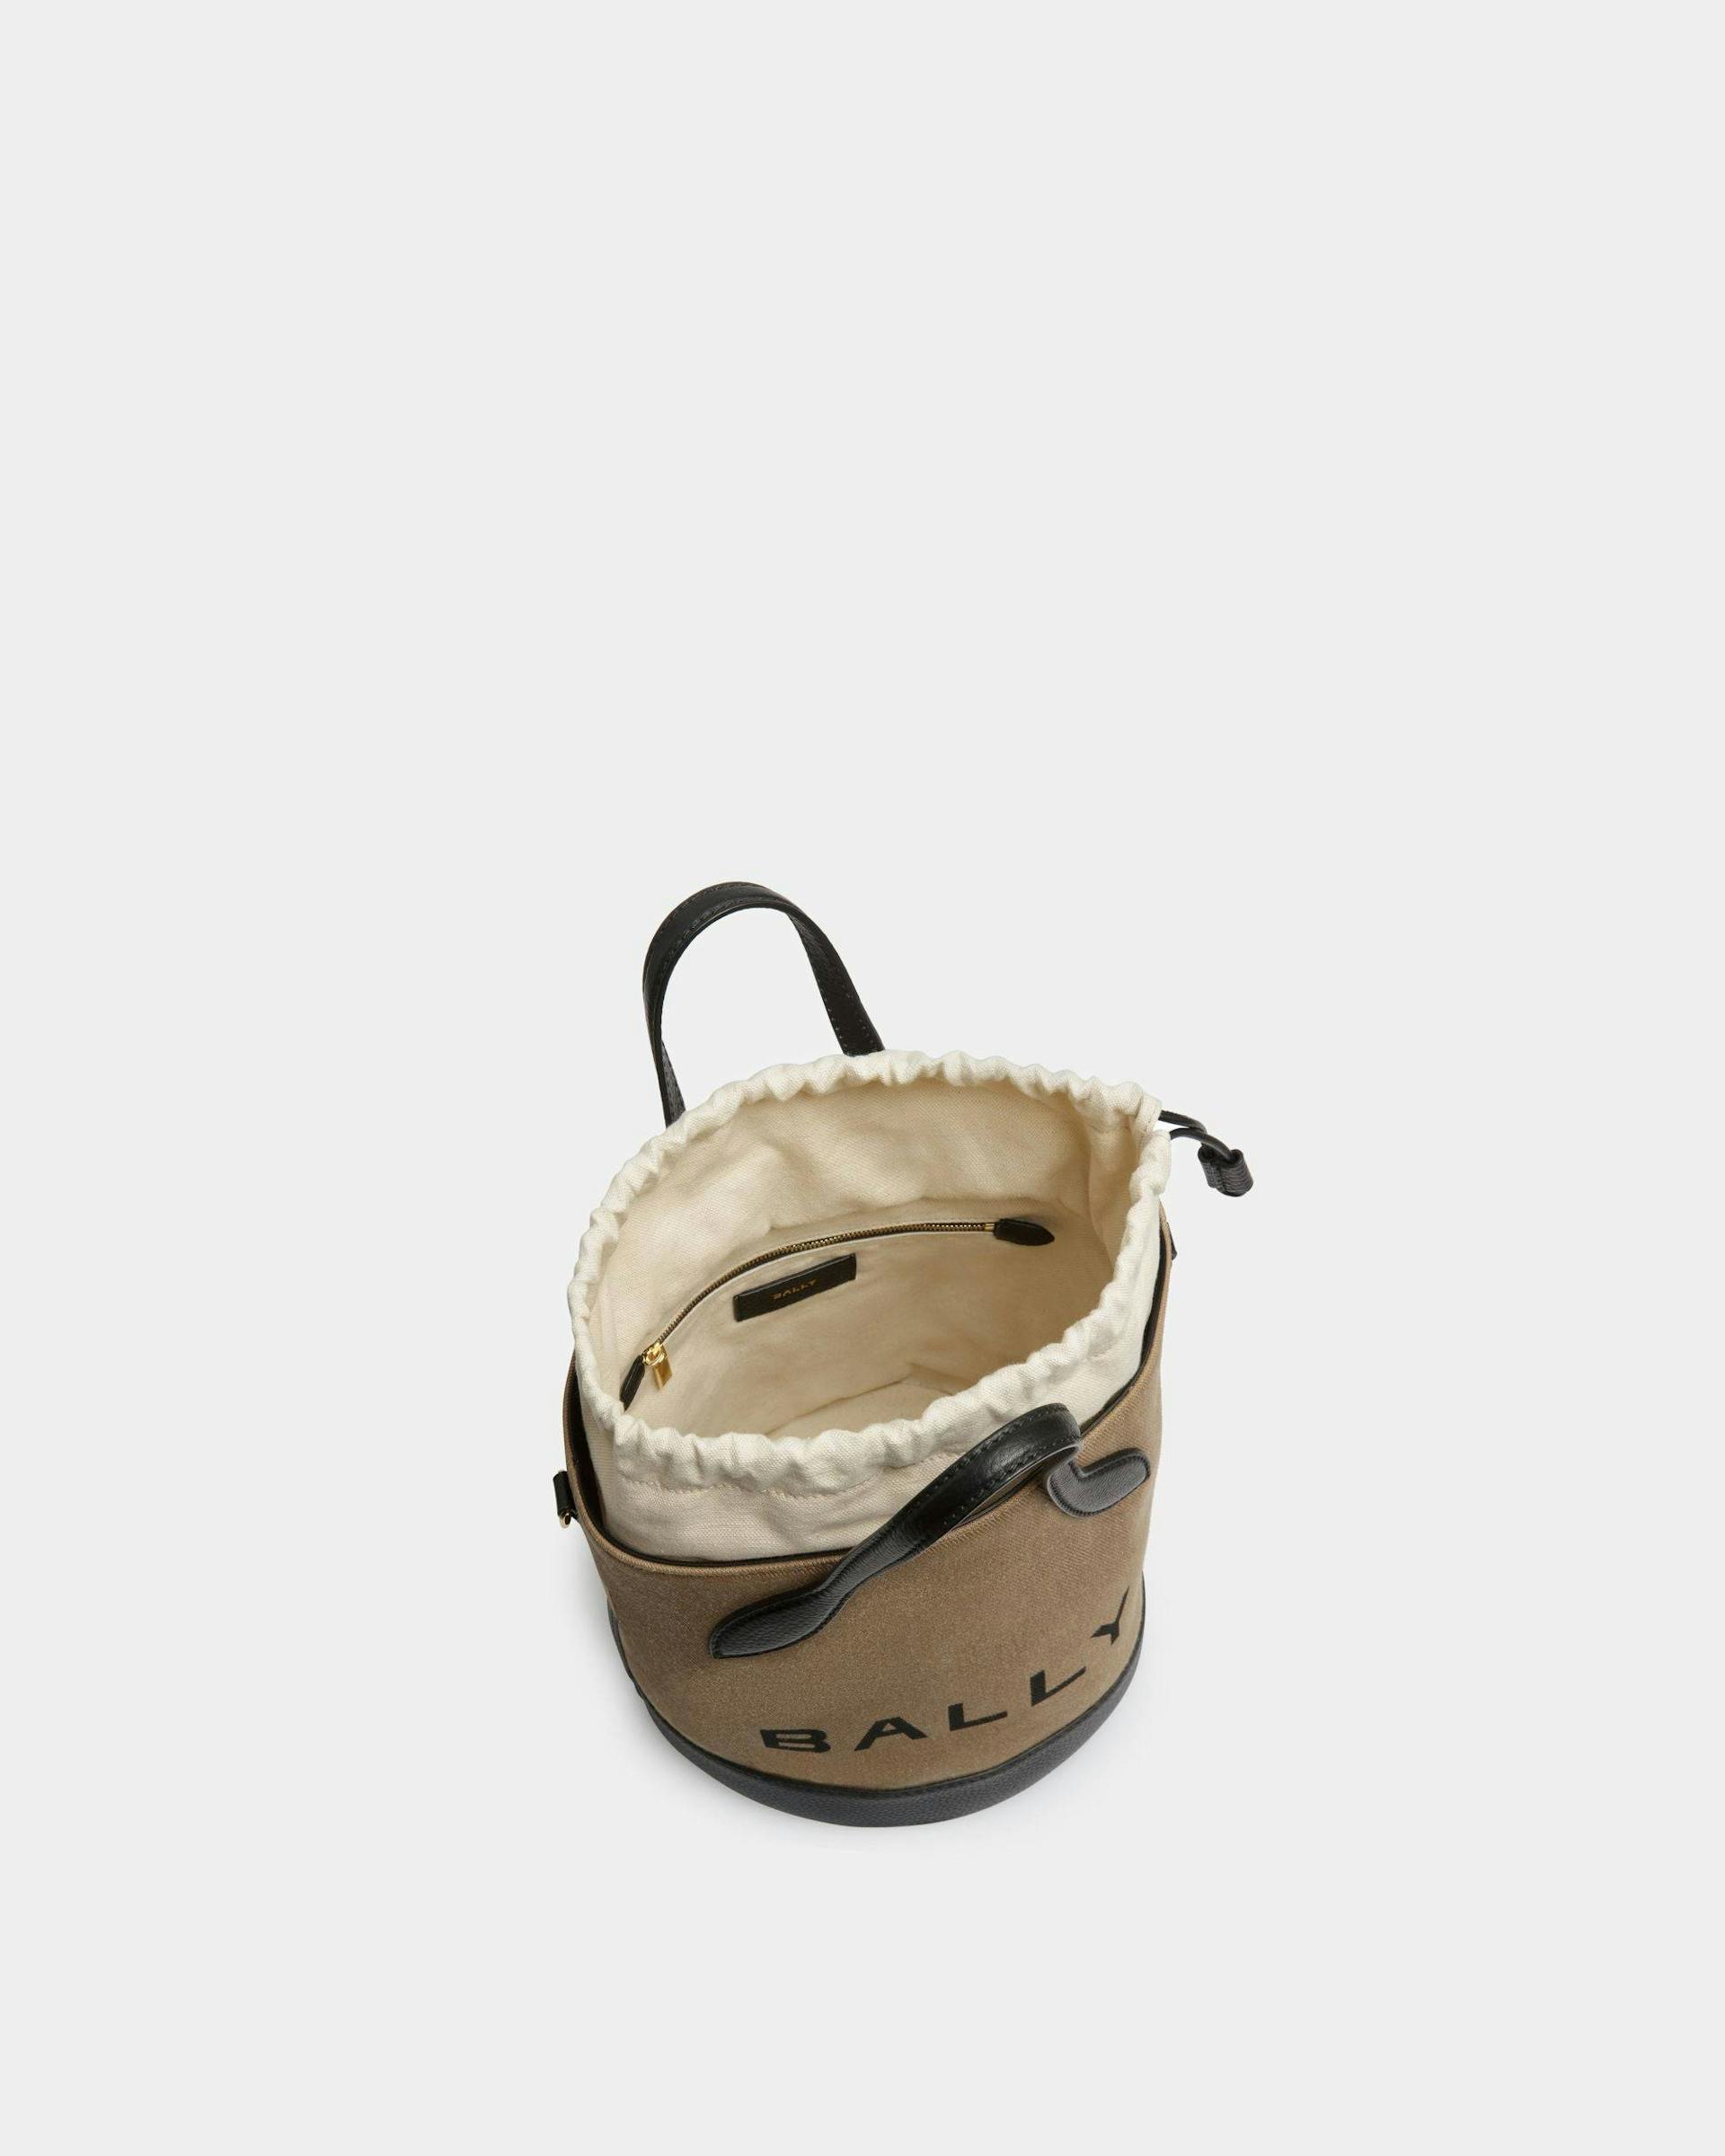 Bar Bucket Bag In Sand And Black Fabric - Women's - Bally - 04